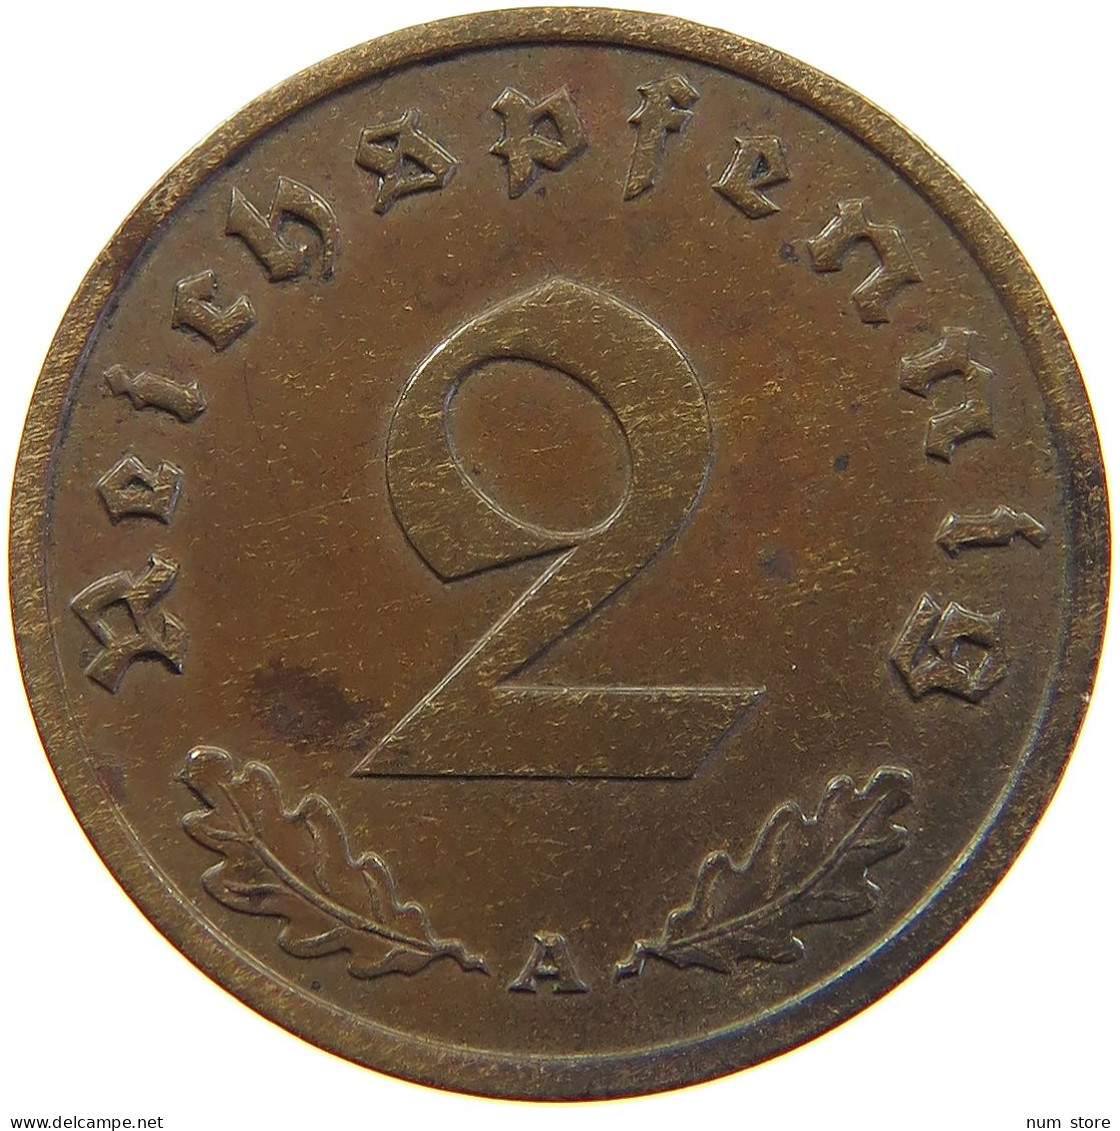 GERMANY 2 PFENNIG 1938 A #c082 0477 - 2 Reichspfennig